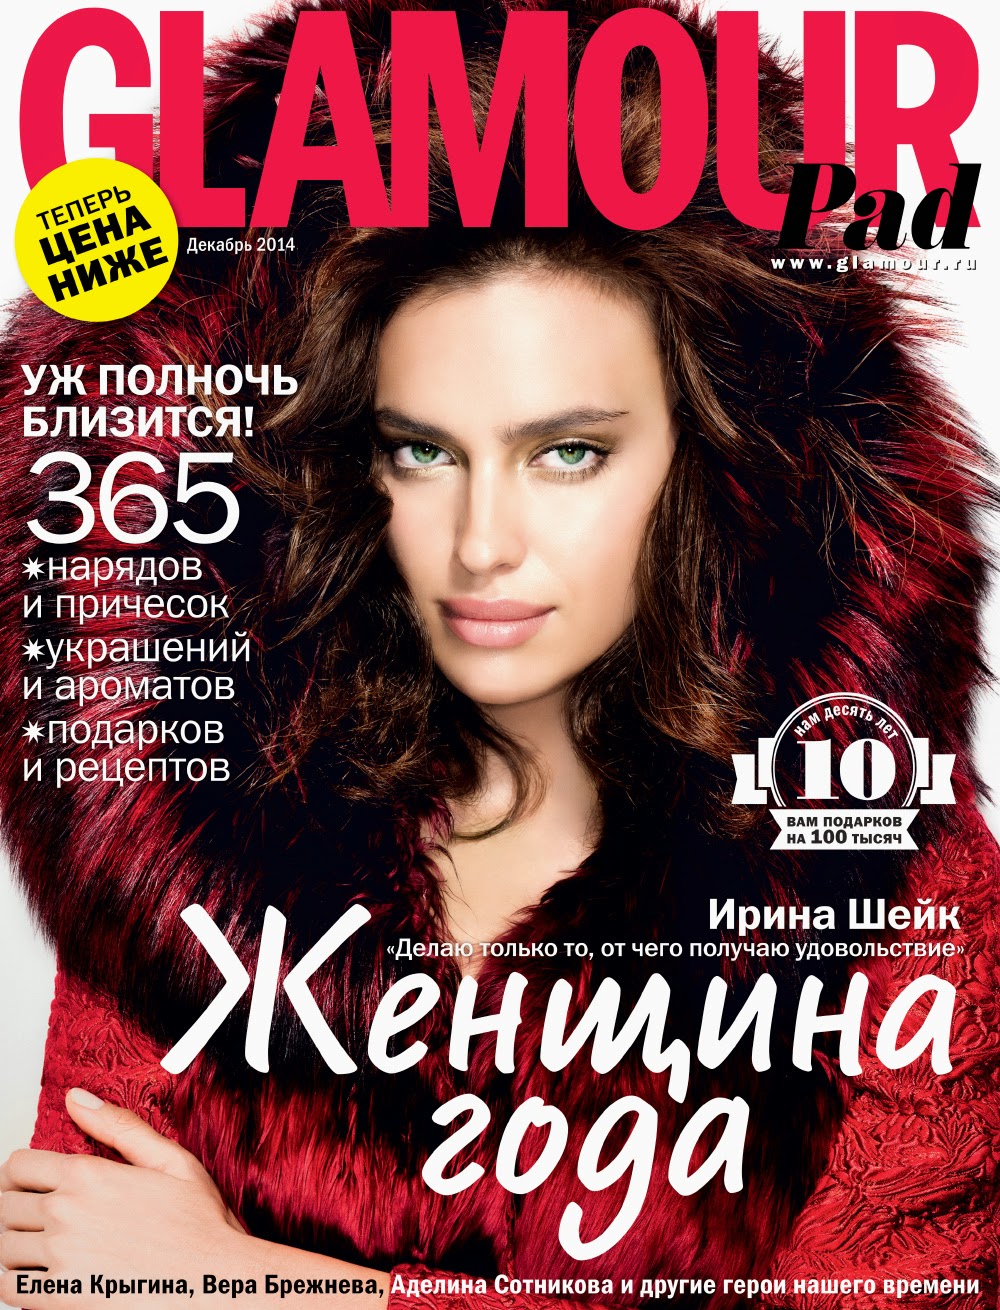 Glamour журнал. Популярные журналы для женщин.